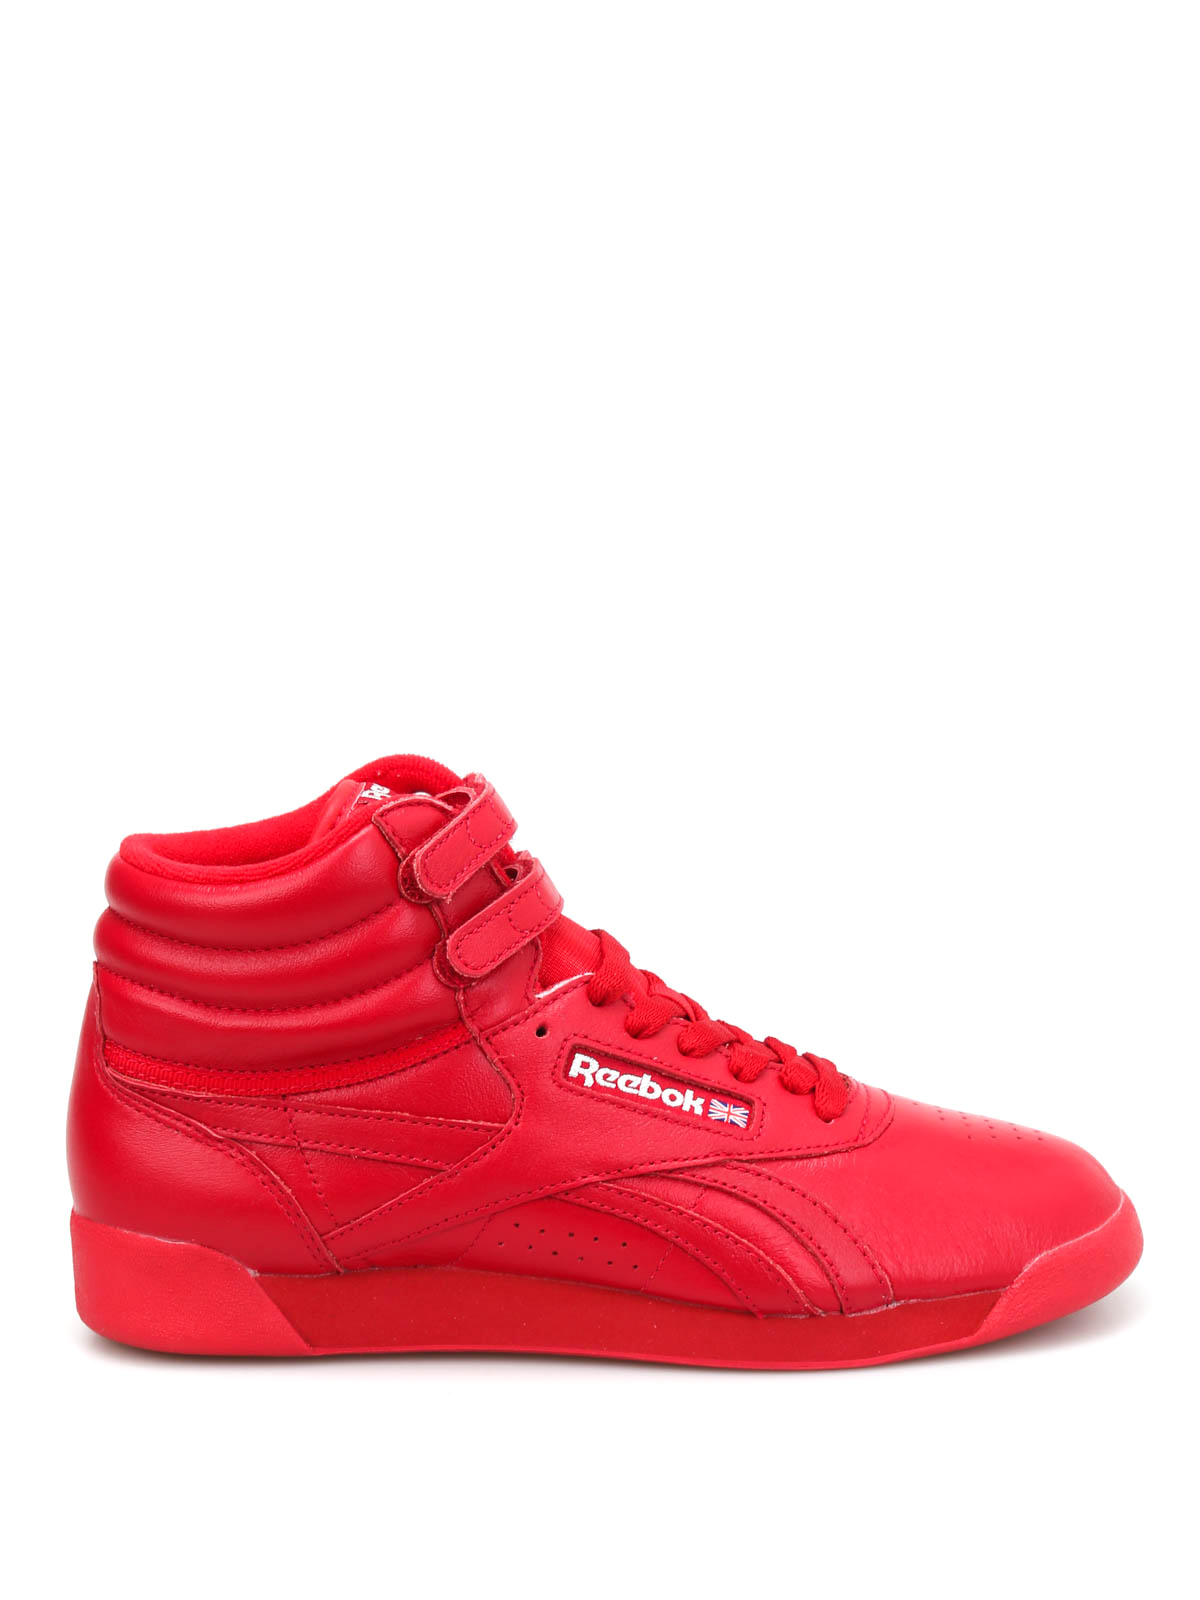 Reebok - Freestyle Hi Og Lux sneakers - trainers - BD4469 | iKRIX.com